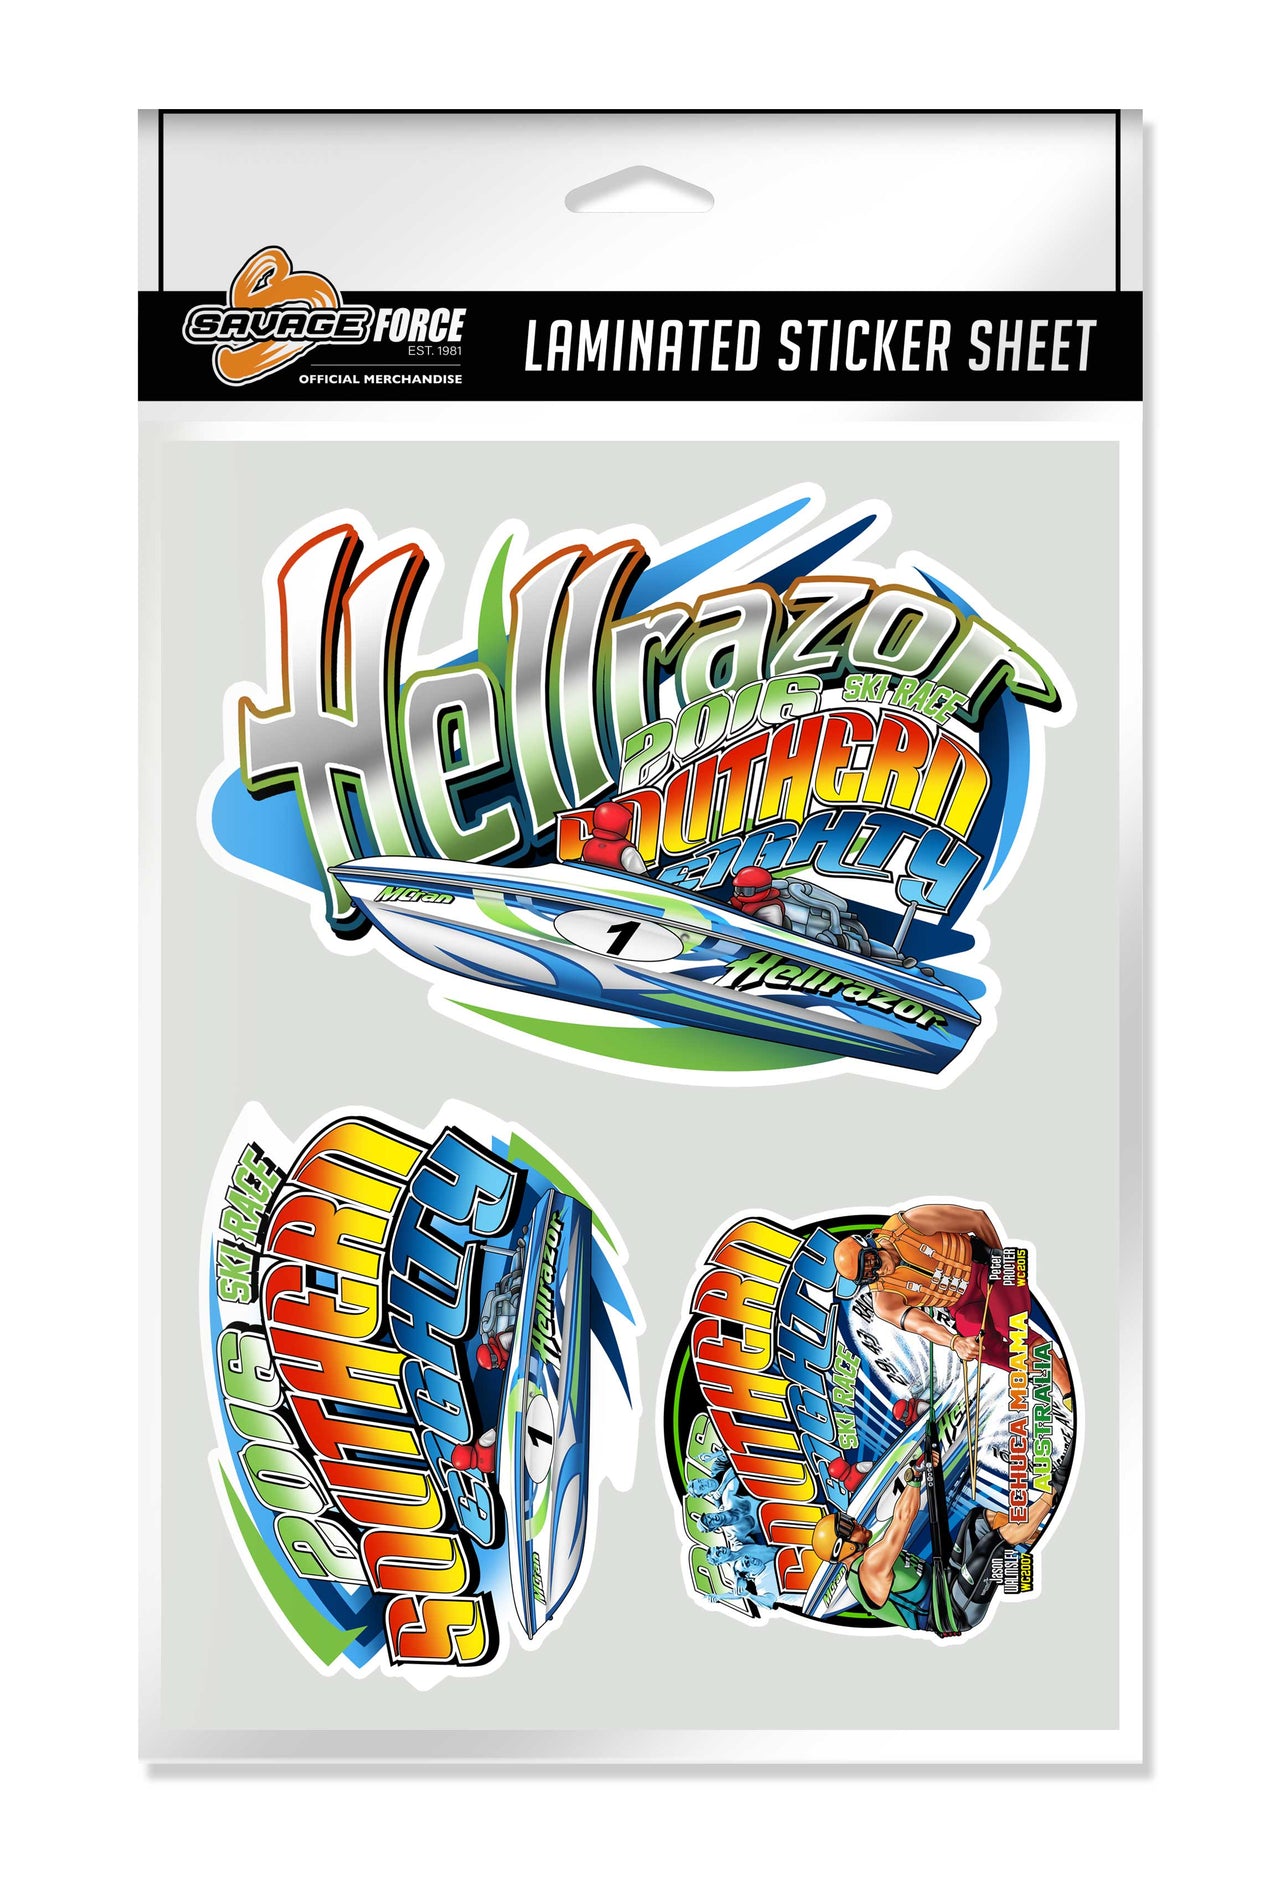 Hellrazor Southern 80 2016 Sticker Sheet